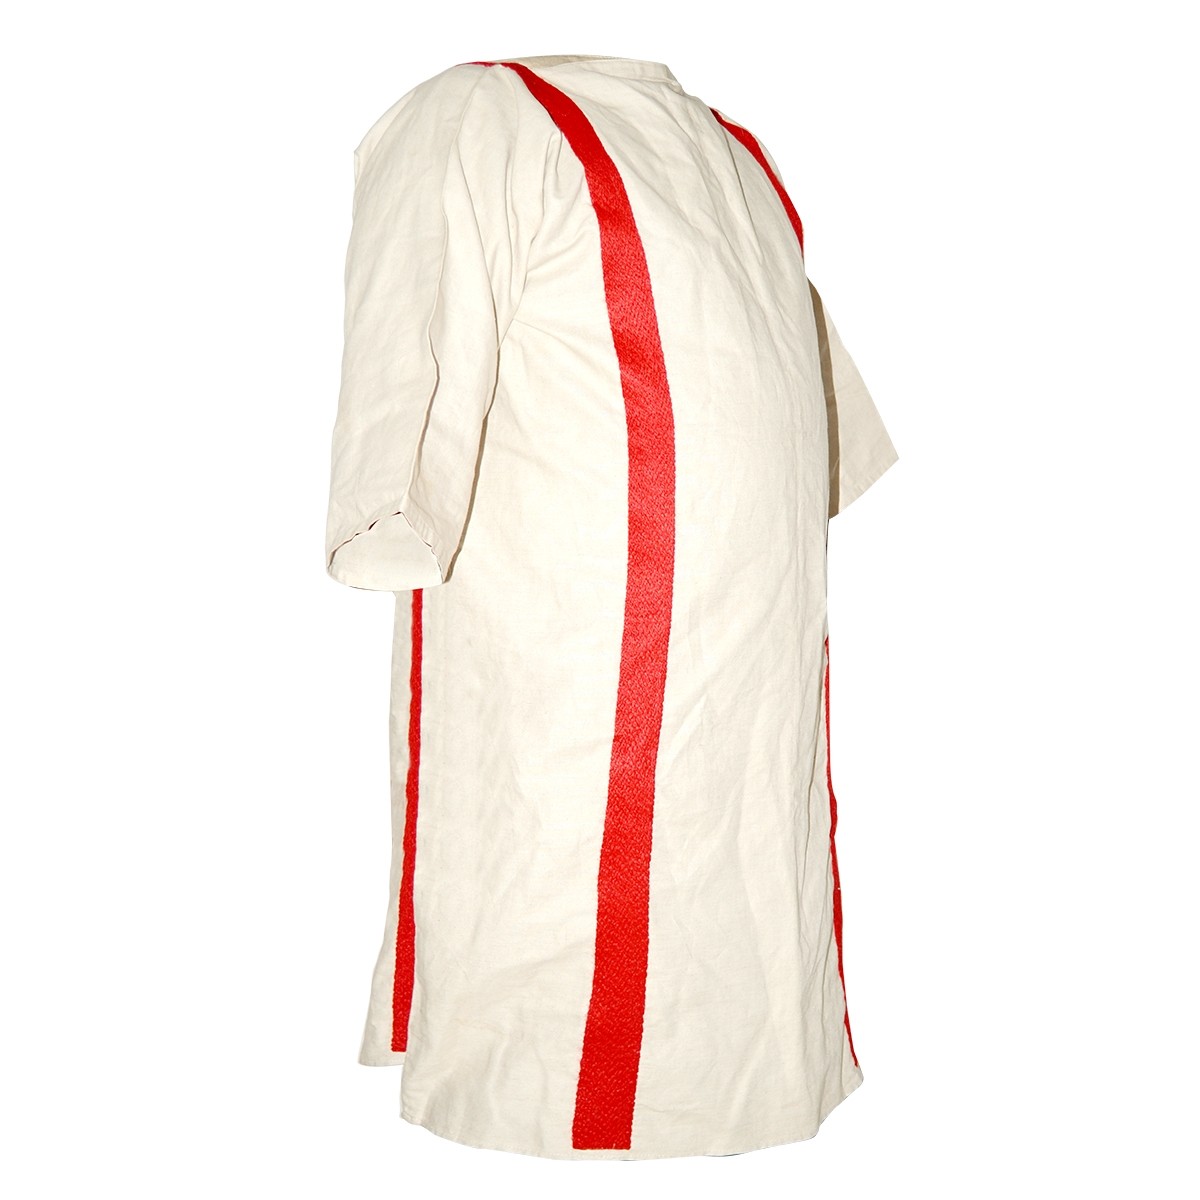 Republican 2nd/3rd Century Full sleeve tunic